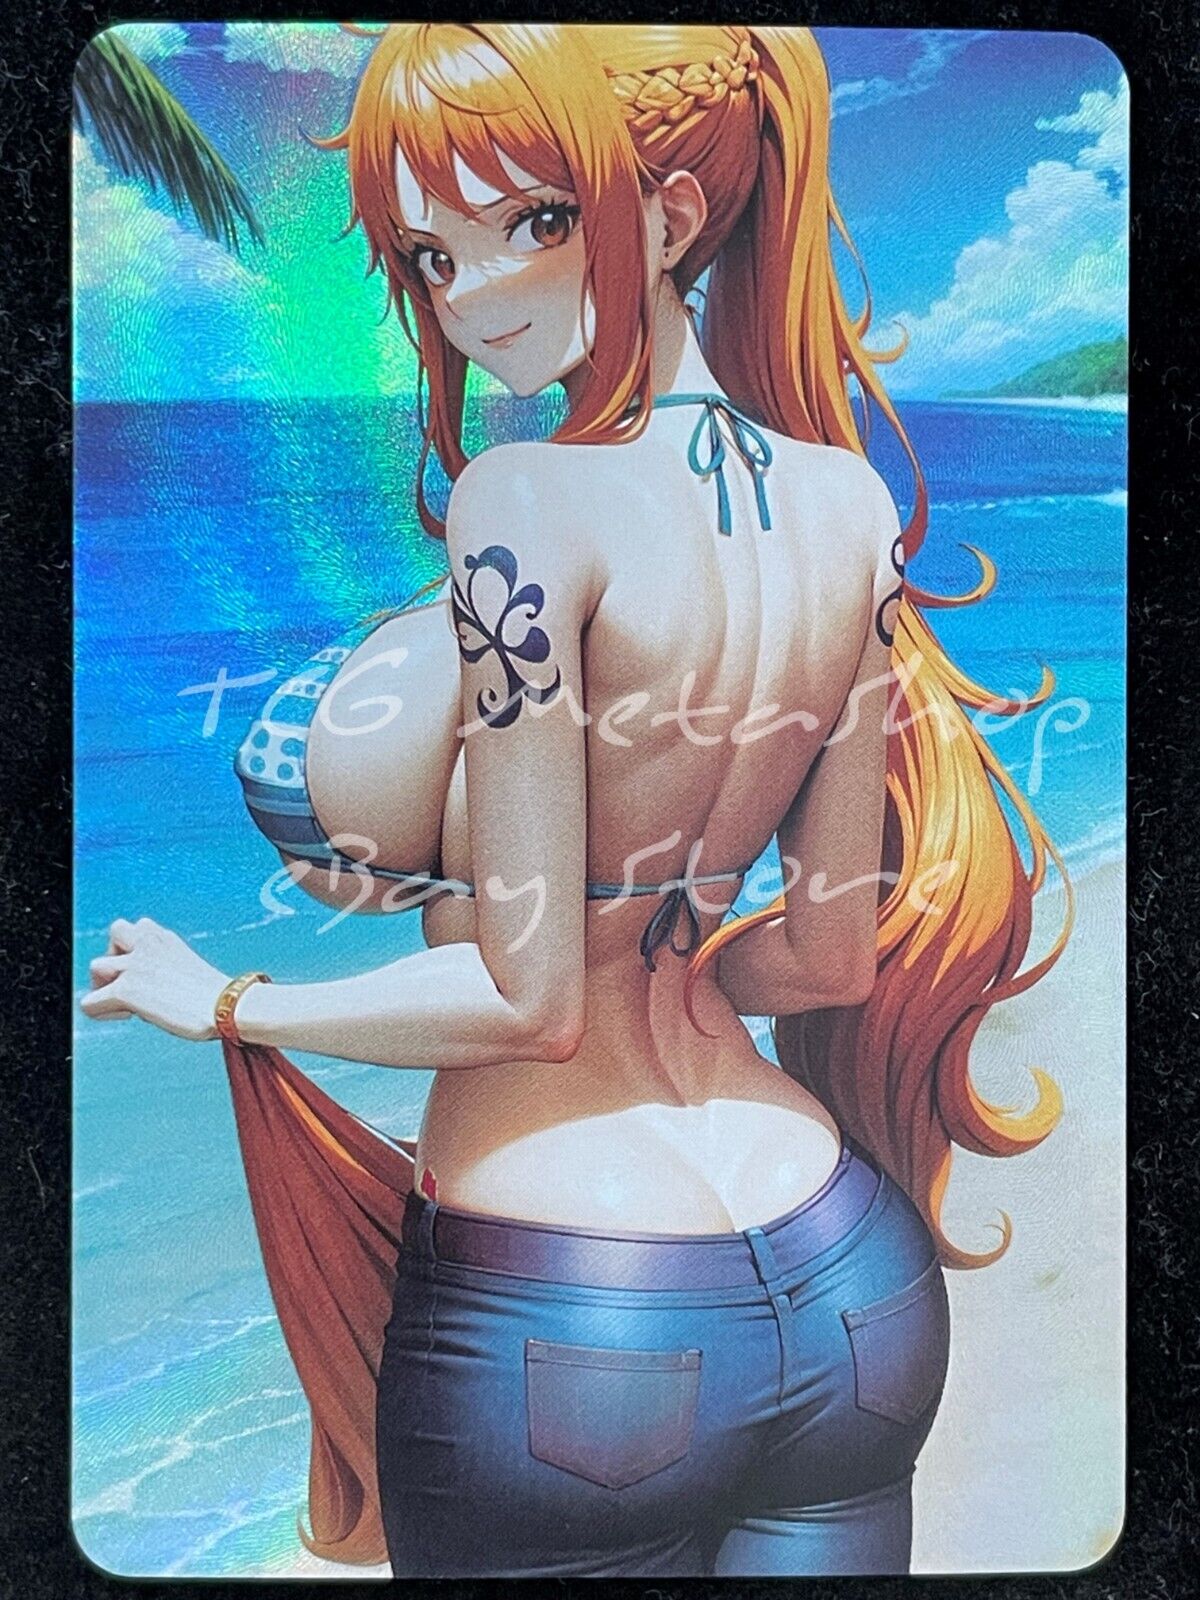 🔥 Nami One Piece Goddess Story Anime Card ACG # 1838 🔥